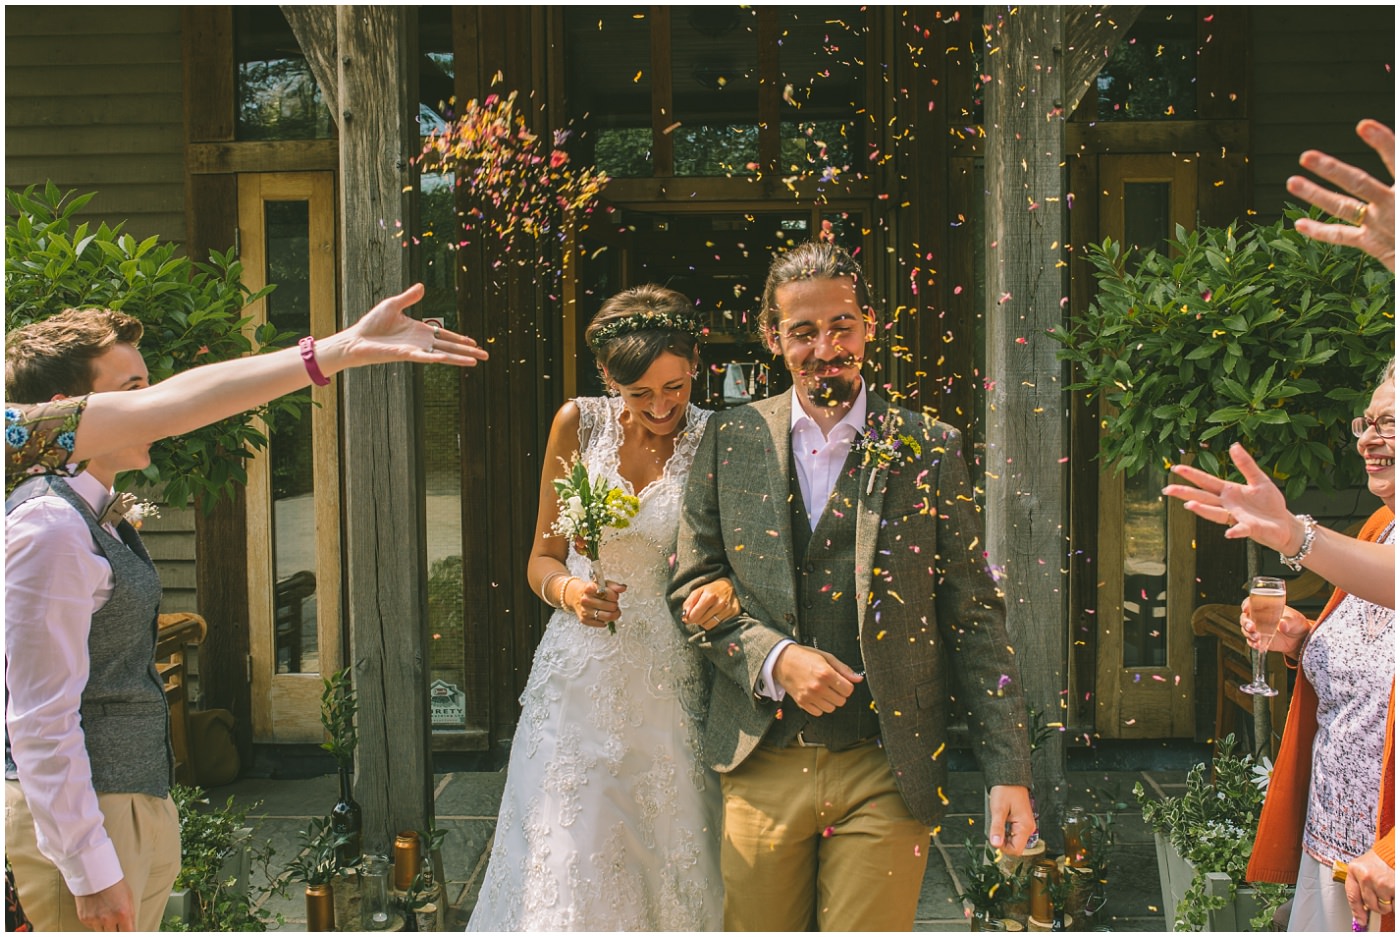 Bride and groom walk arm in arm through confetti